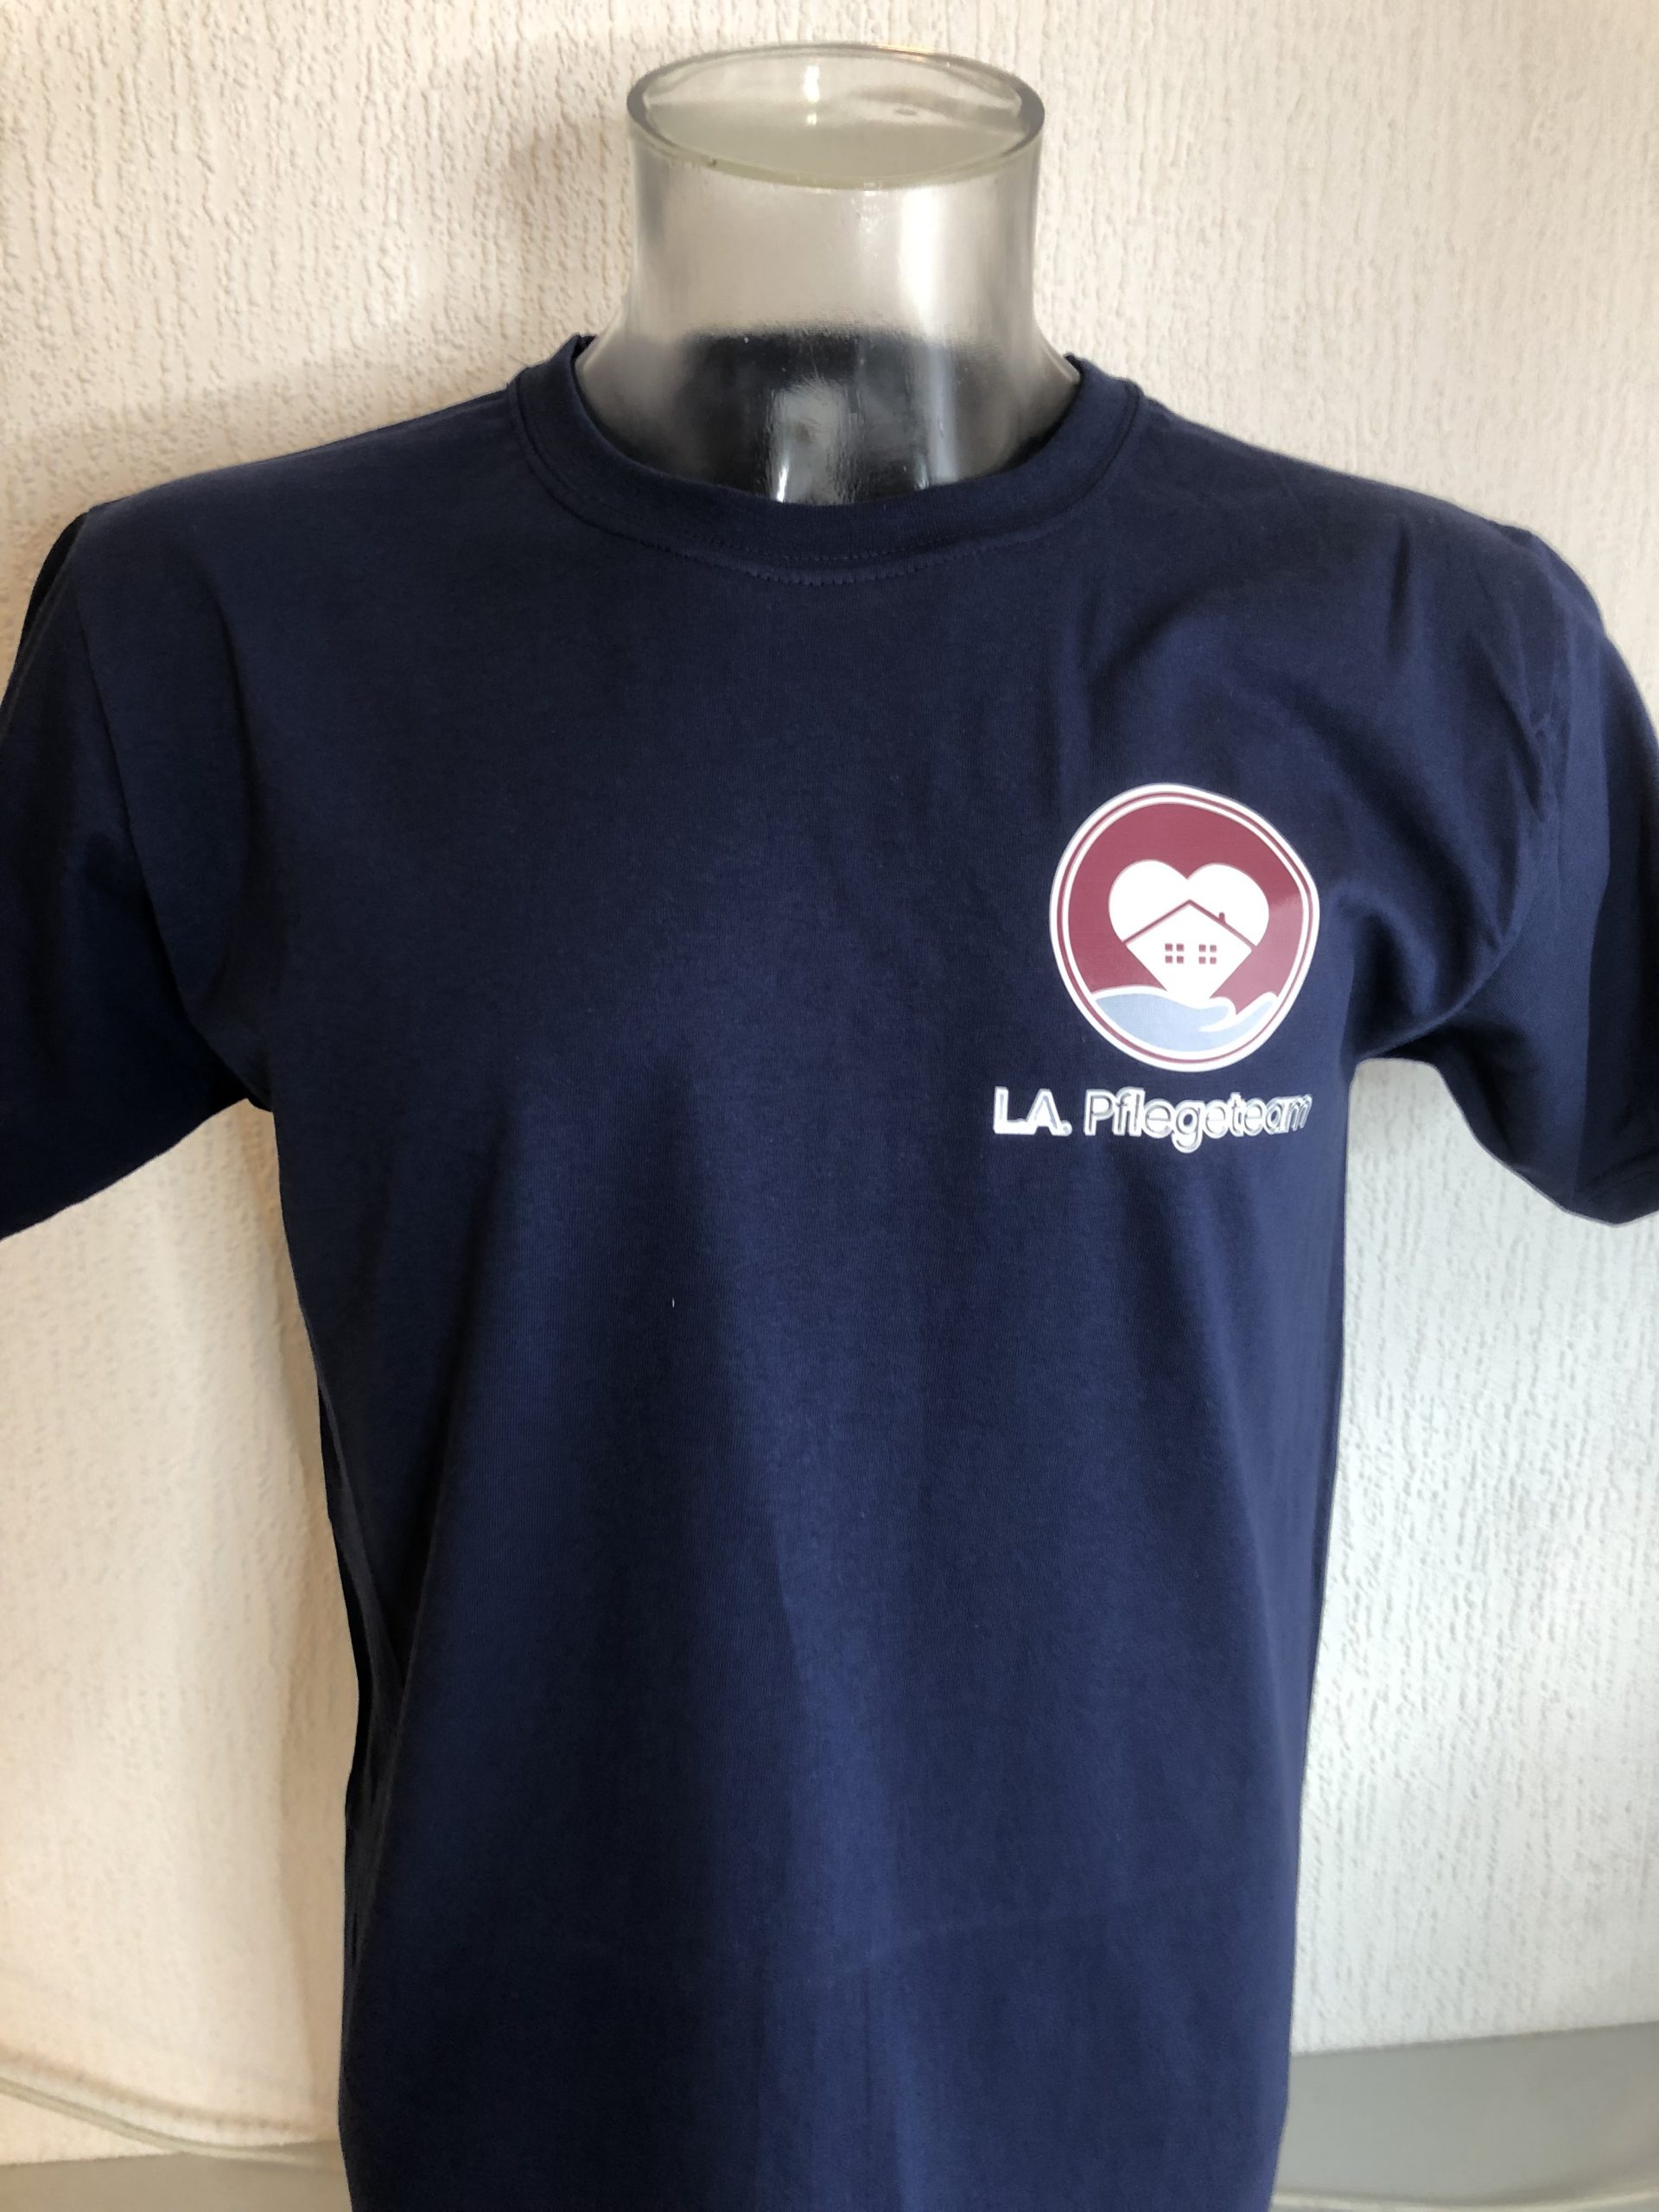 LA-Pflegeteam (2)